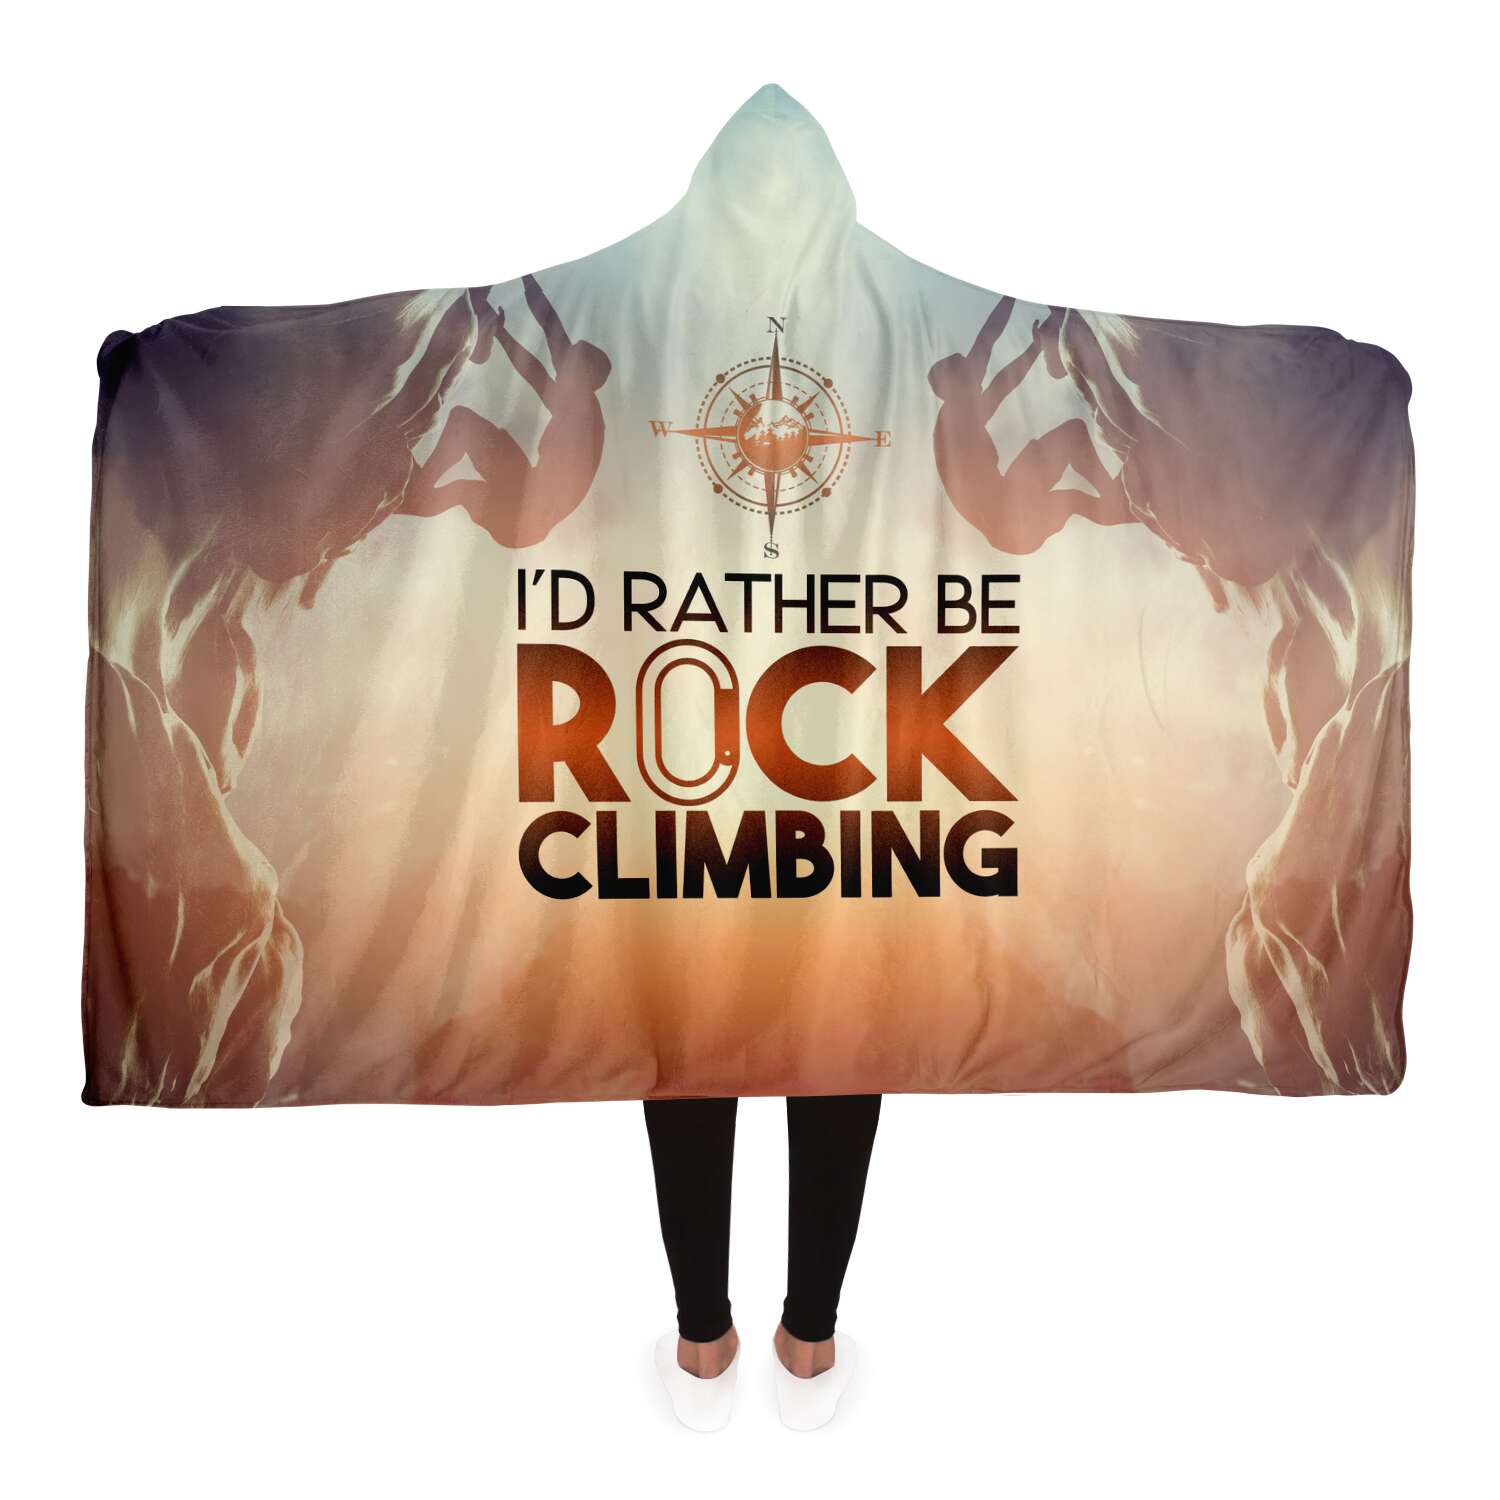 I Rather Rock Climb Hooded Blanket